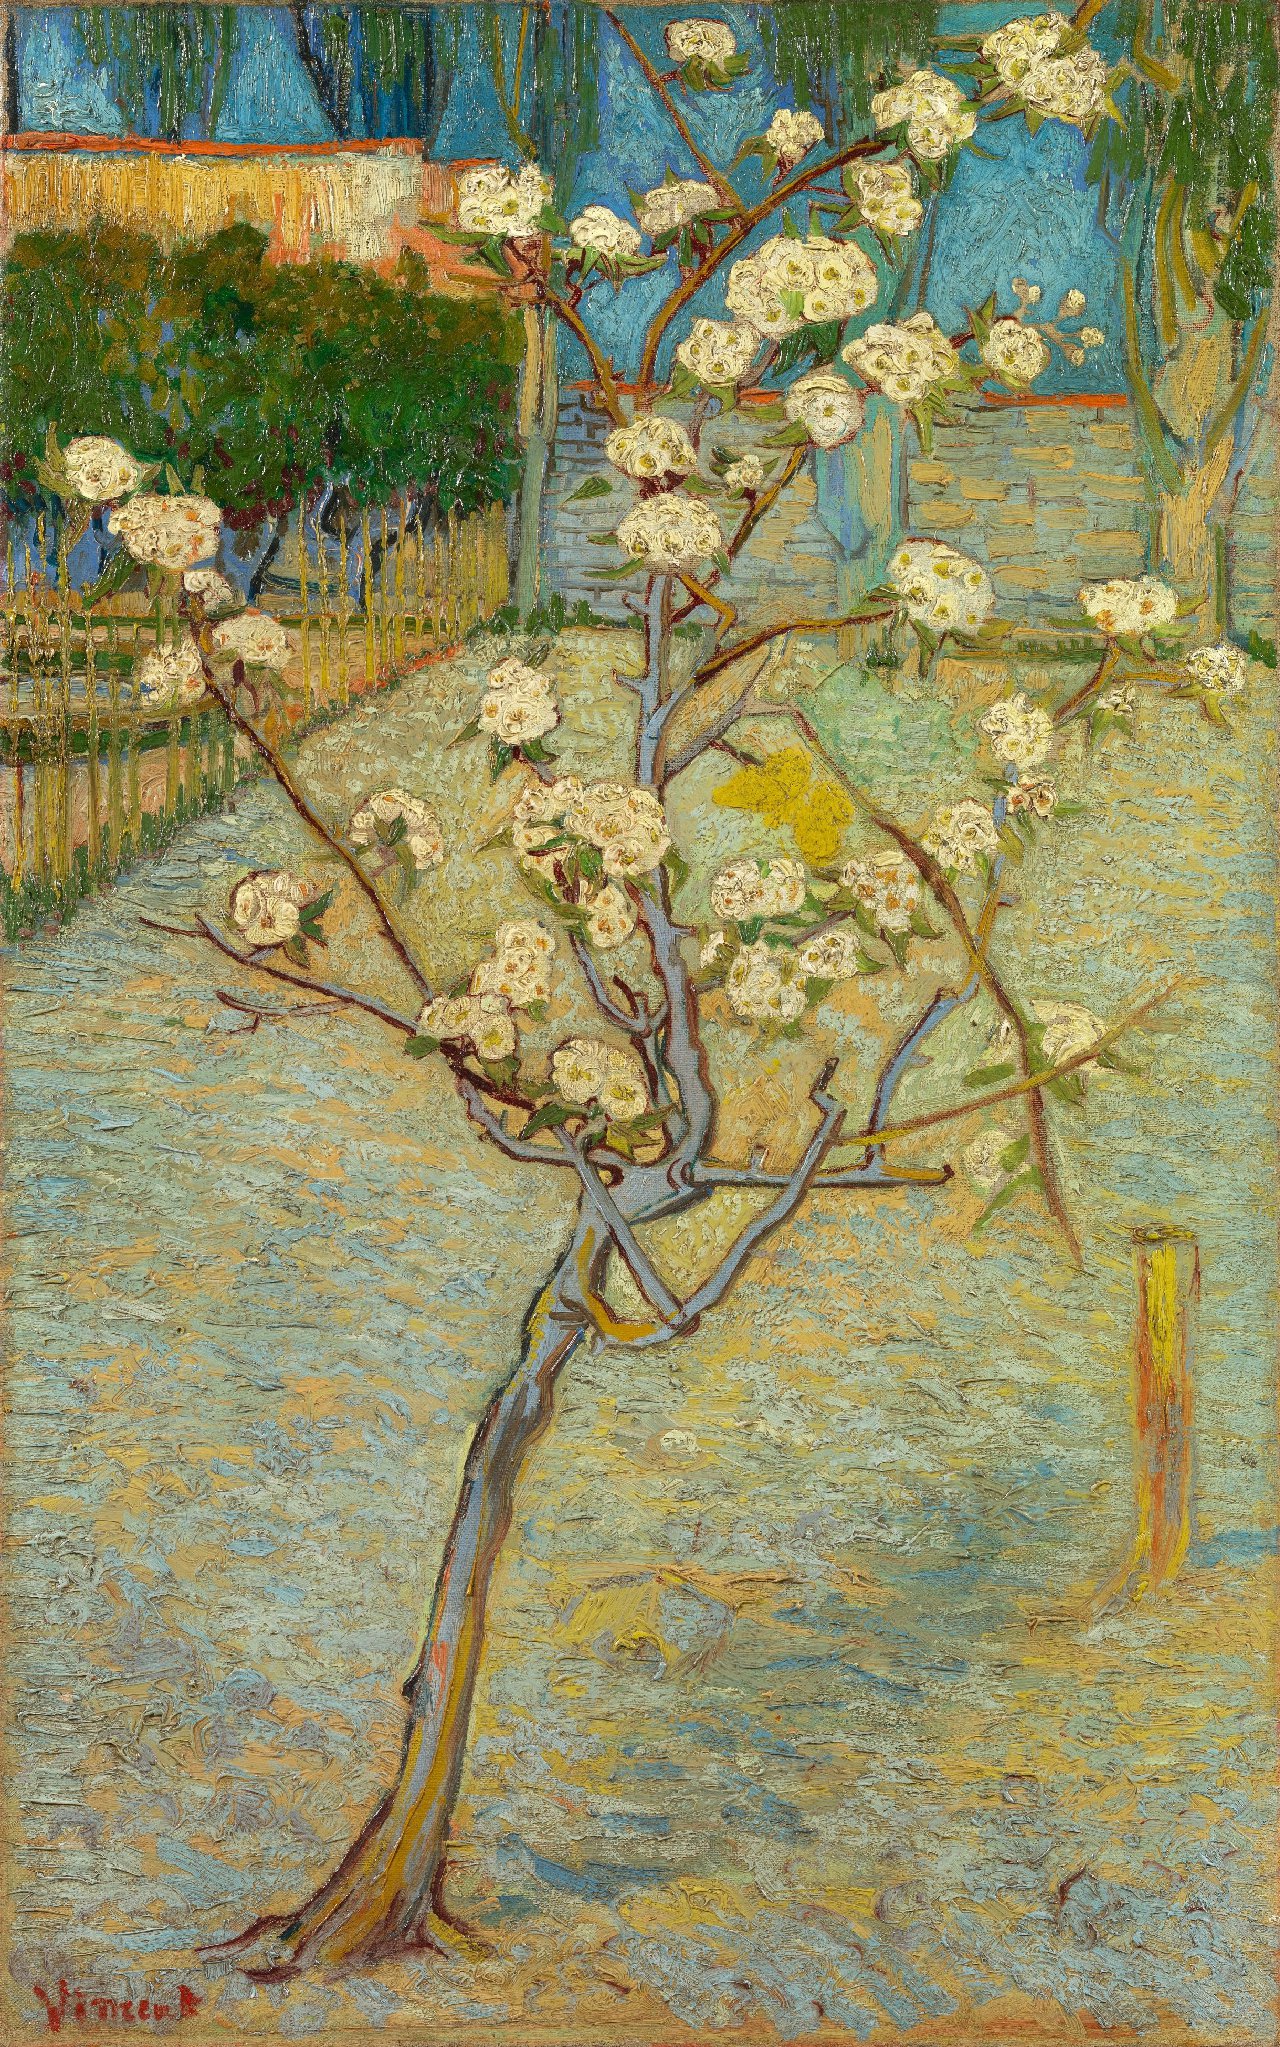 Kleiner Birnbaum in Blüte by Vincent van Gogh - April 1888 - 73.6 x 46.3 cm Van Gogh Museum